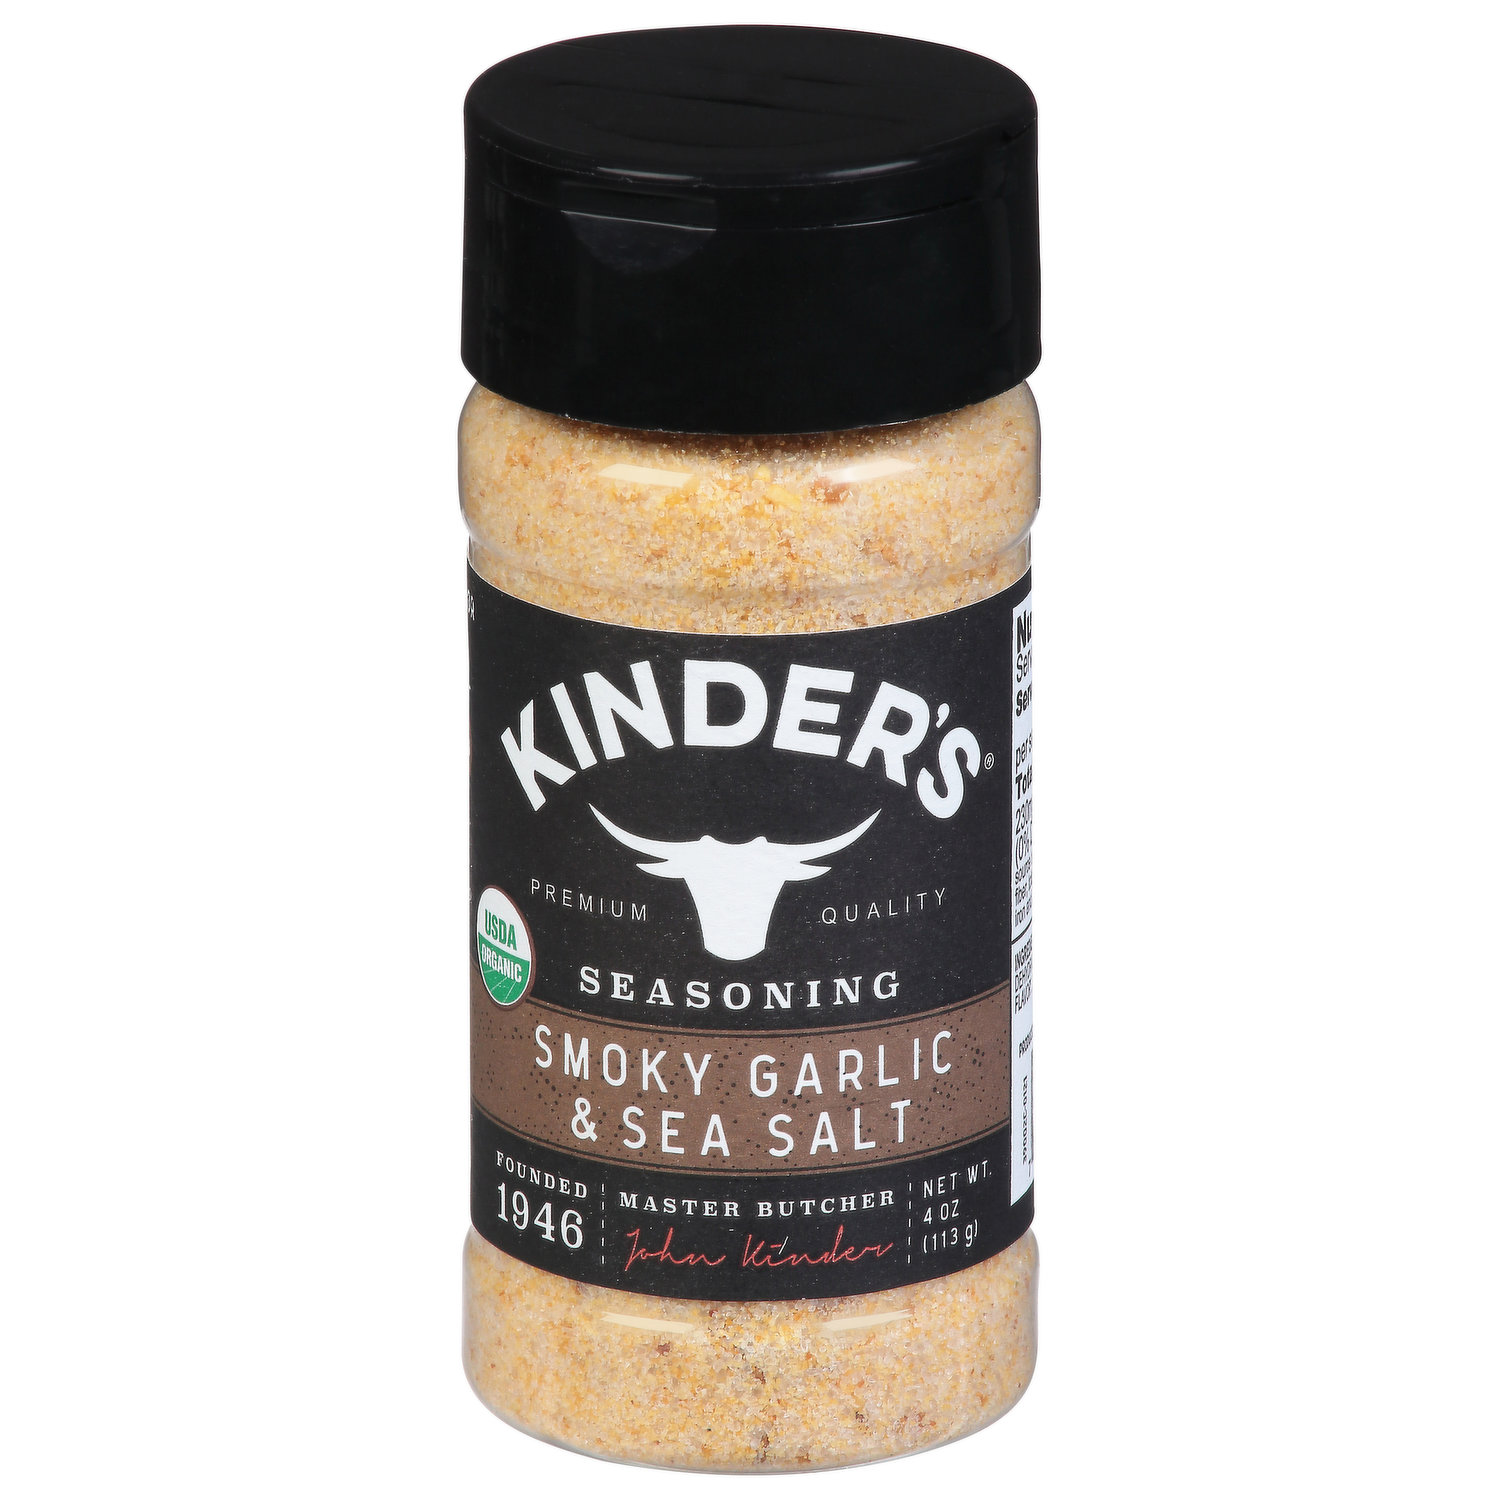 Kinder's Seasoning, Smoky Garlic & Sea Salt